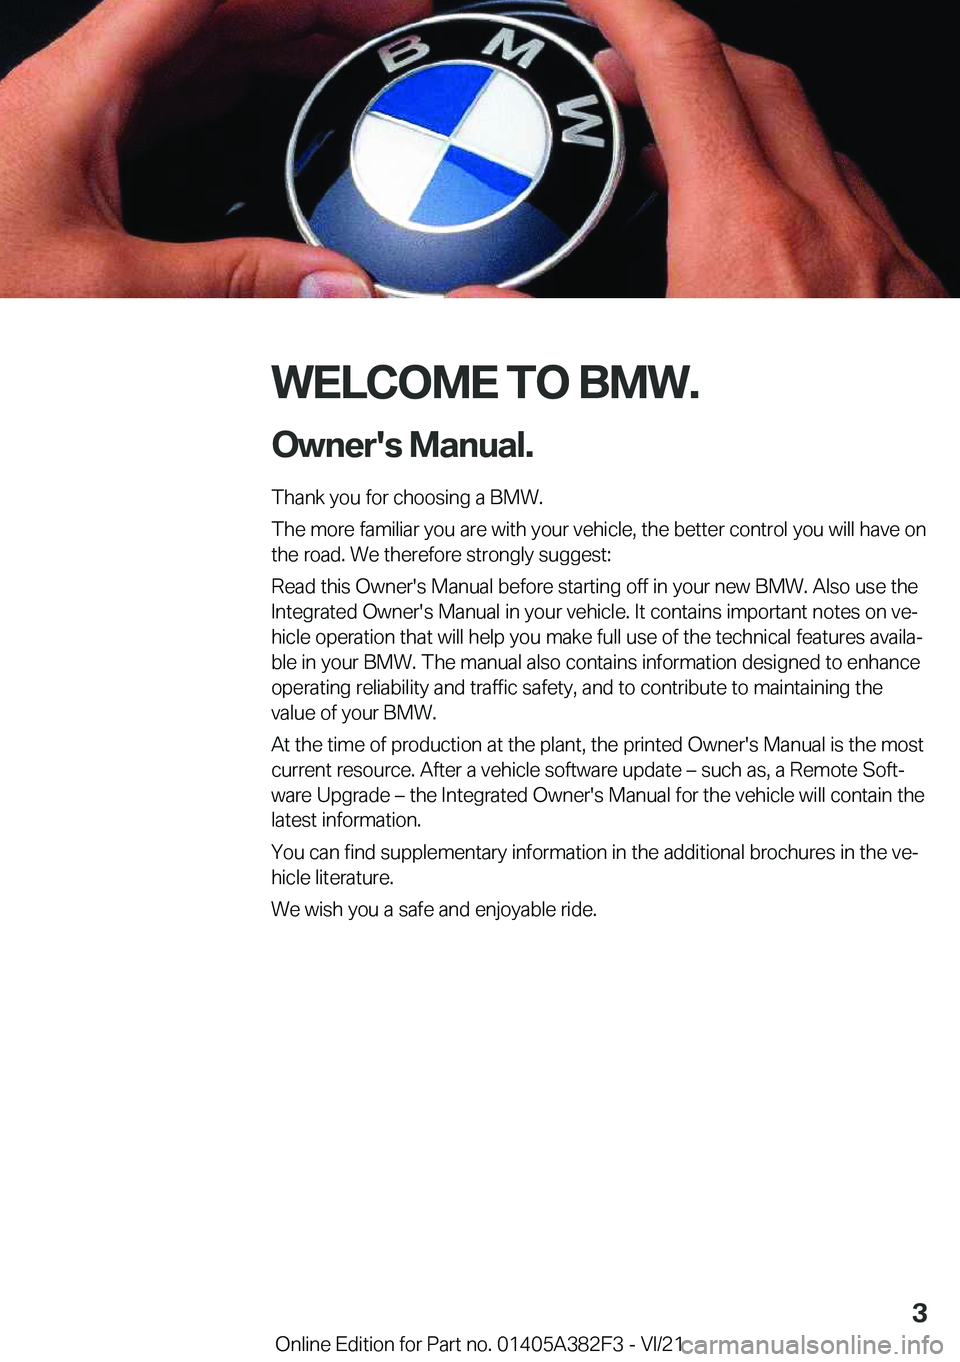 BMW Z4 2022  Owners Manual �W�E�L�C�O�M�E��T�O��B�M�W�.�O�w�n�e�r�'�s��M�a�n�u�a�l�.
�T�h�a�n�k��y�o�u��f�o�r��c�h�o�o�s�i�n�g��a��B�M�W�.
�T�h�e��m�o�r�e��f�a�m�i�l�i�a�r��y�o�u��a�r�e��w�i�t�h��y�o�u�r��v�e